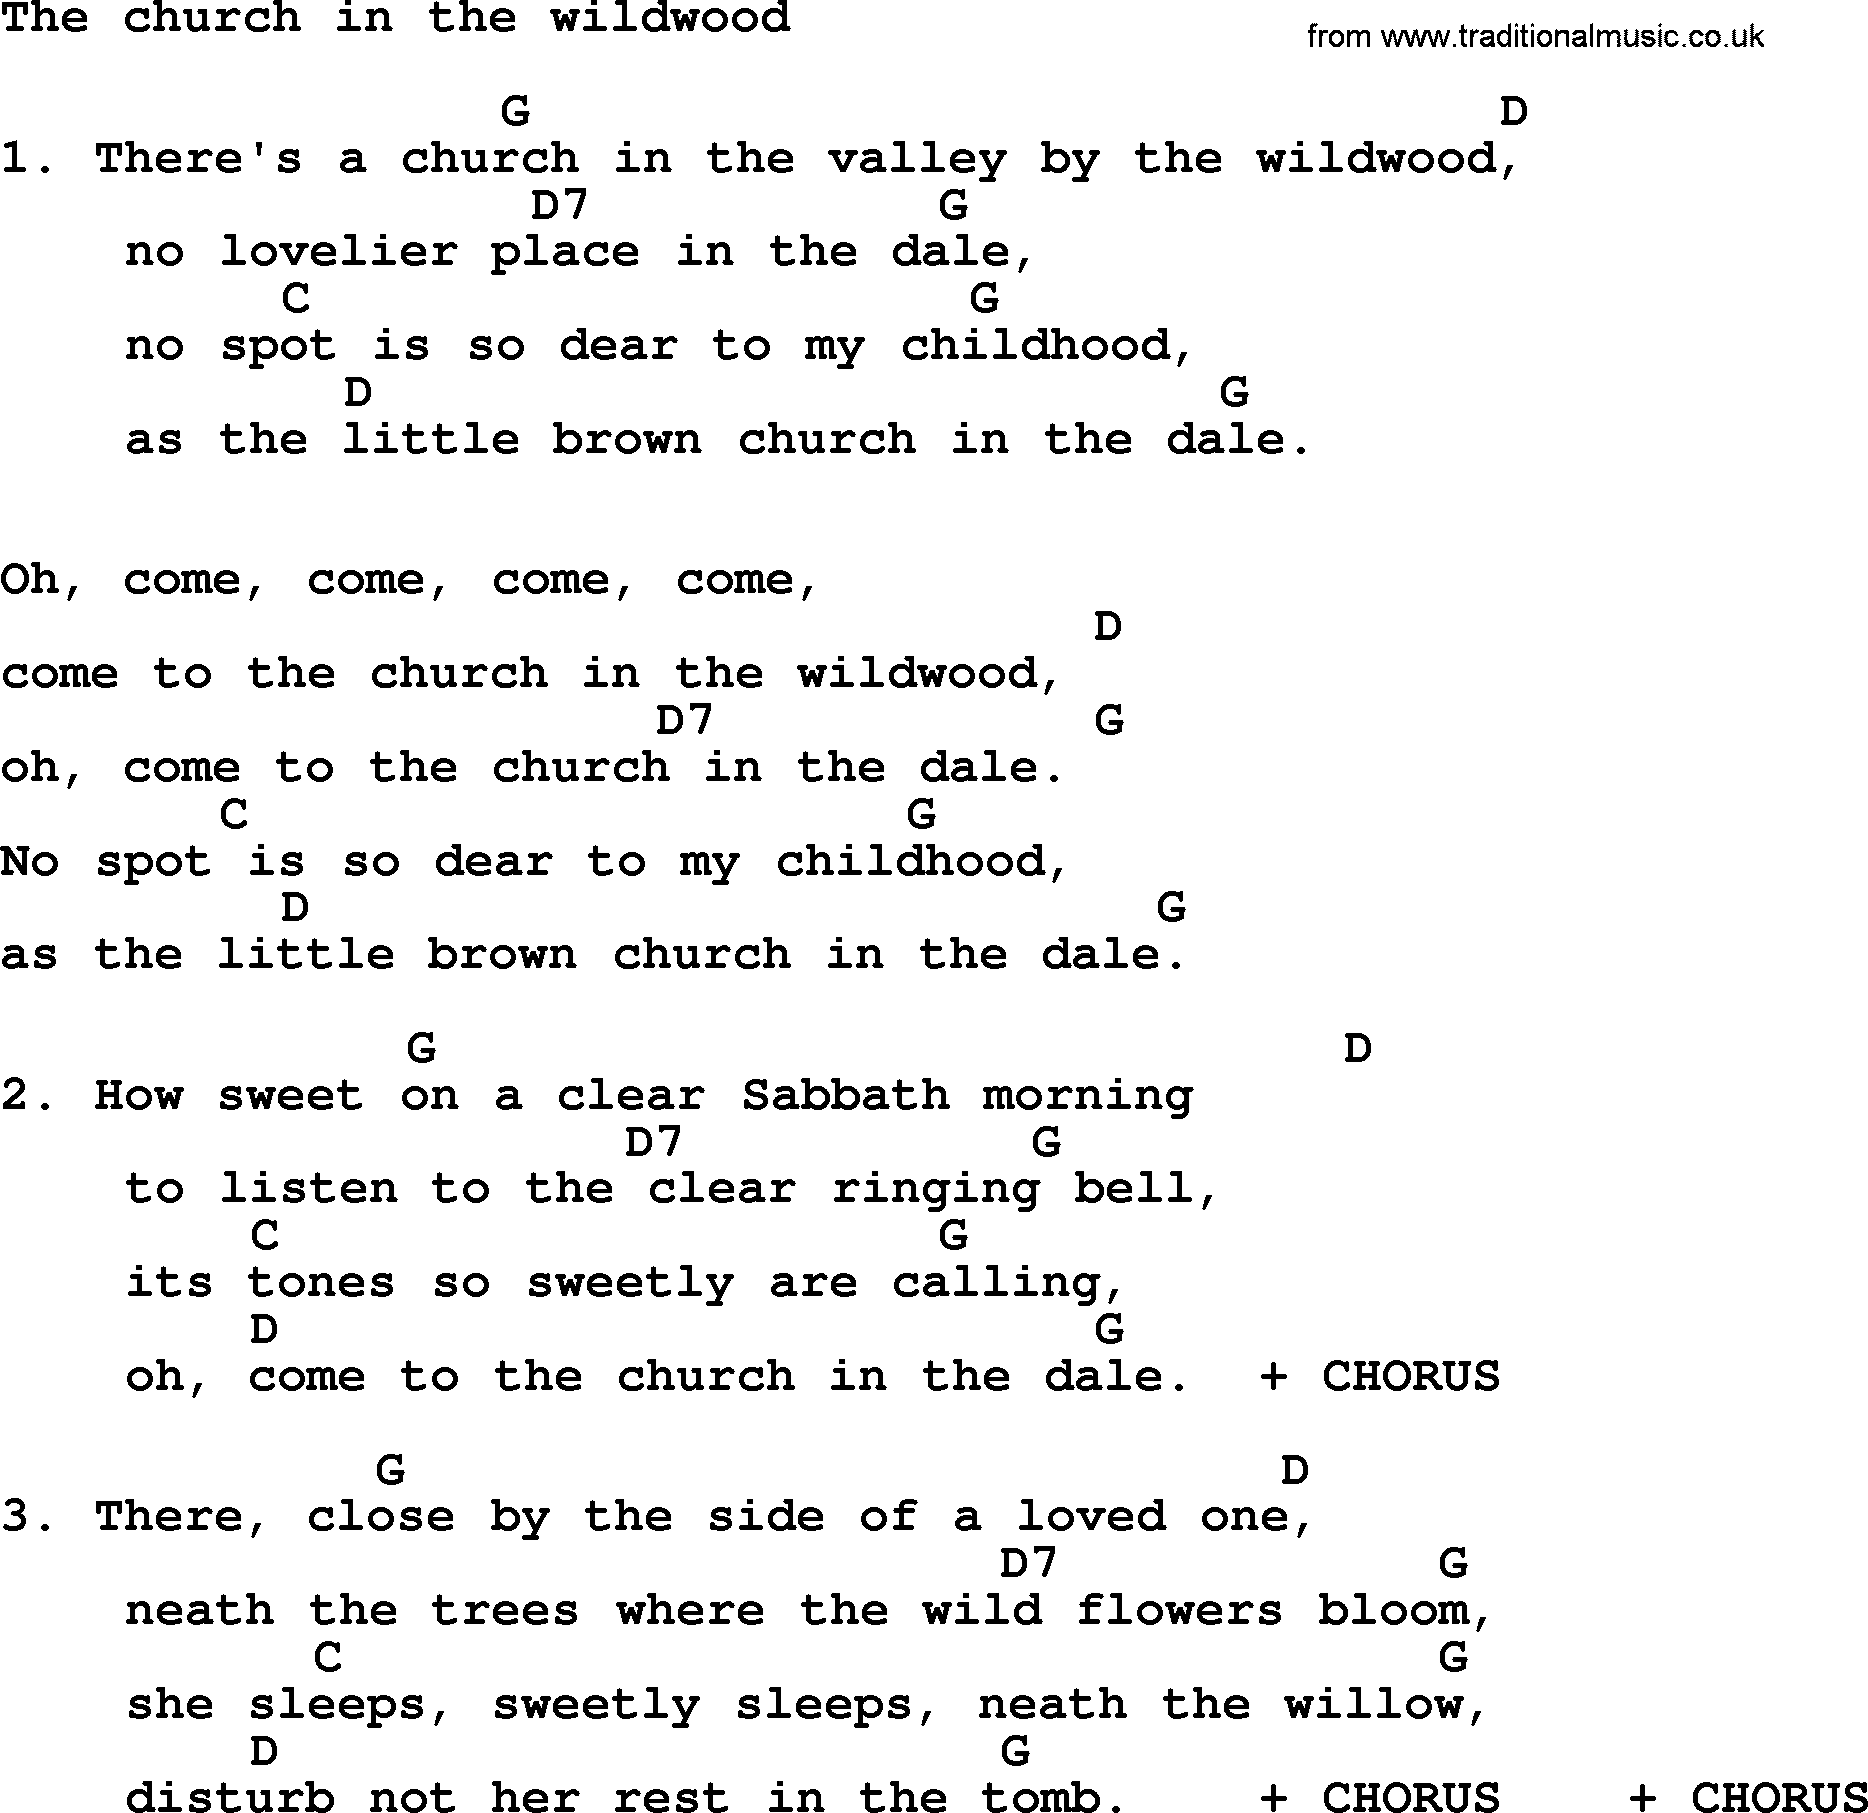 Loretta Lynn song: The Church In The Wildwood lyrics and chords